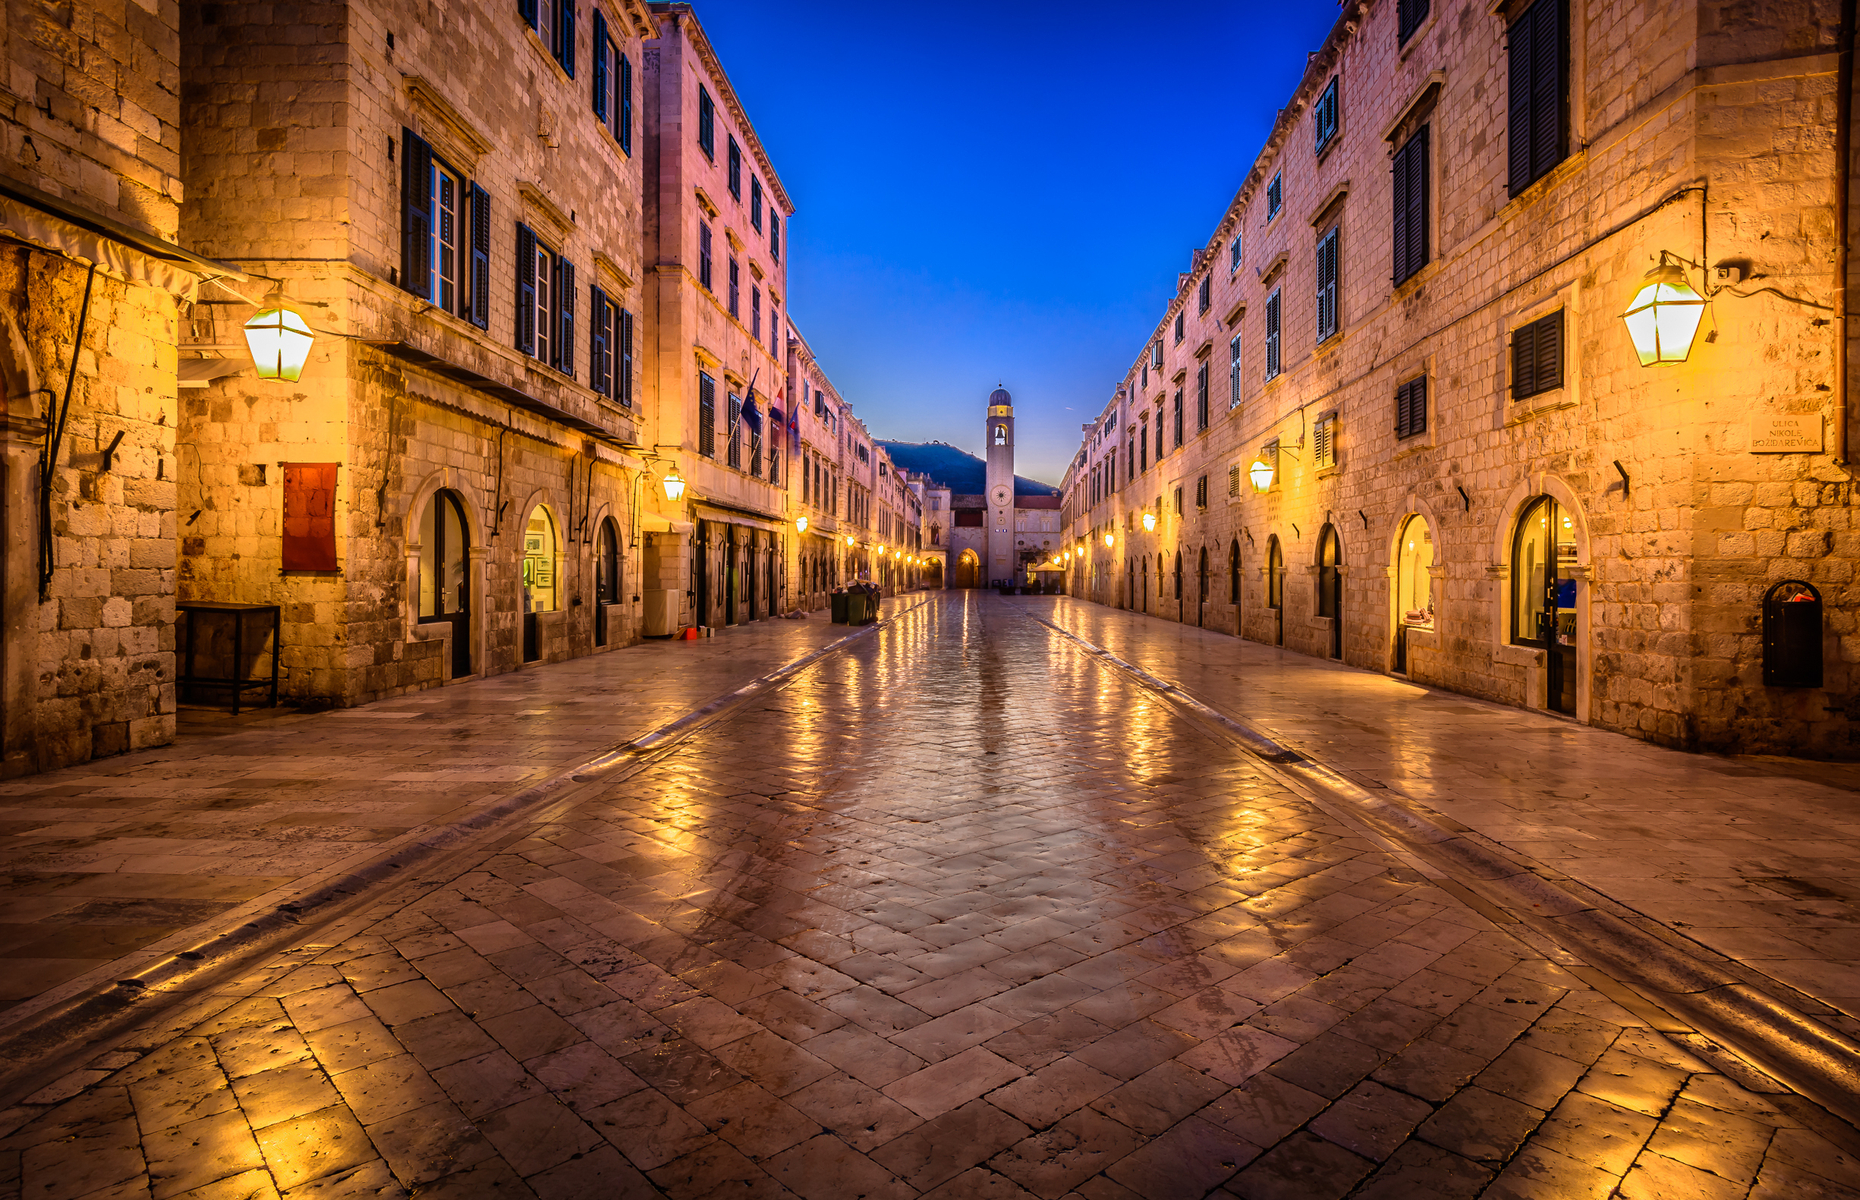 Stradun in Dubrovnik (Image: Dreamer4787/Shutterstock)